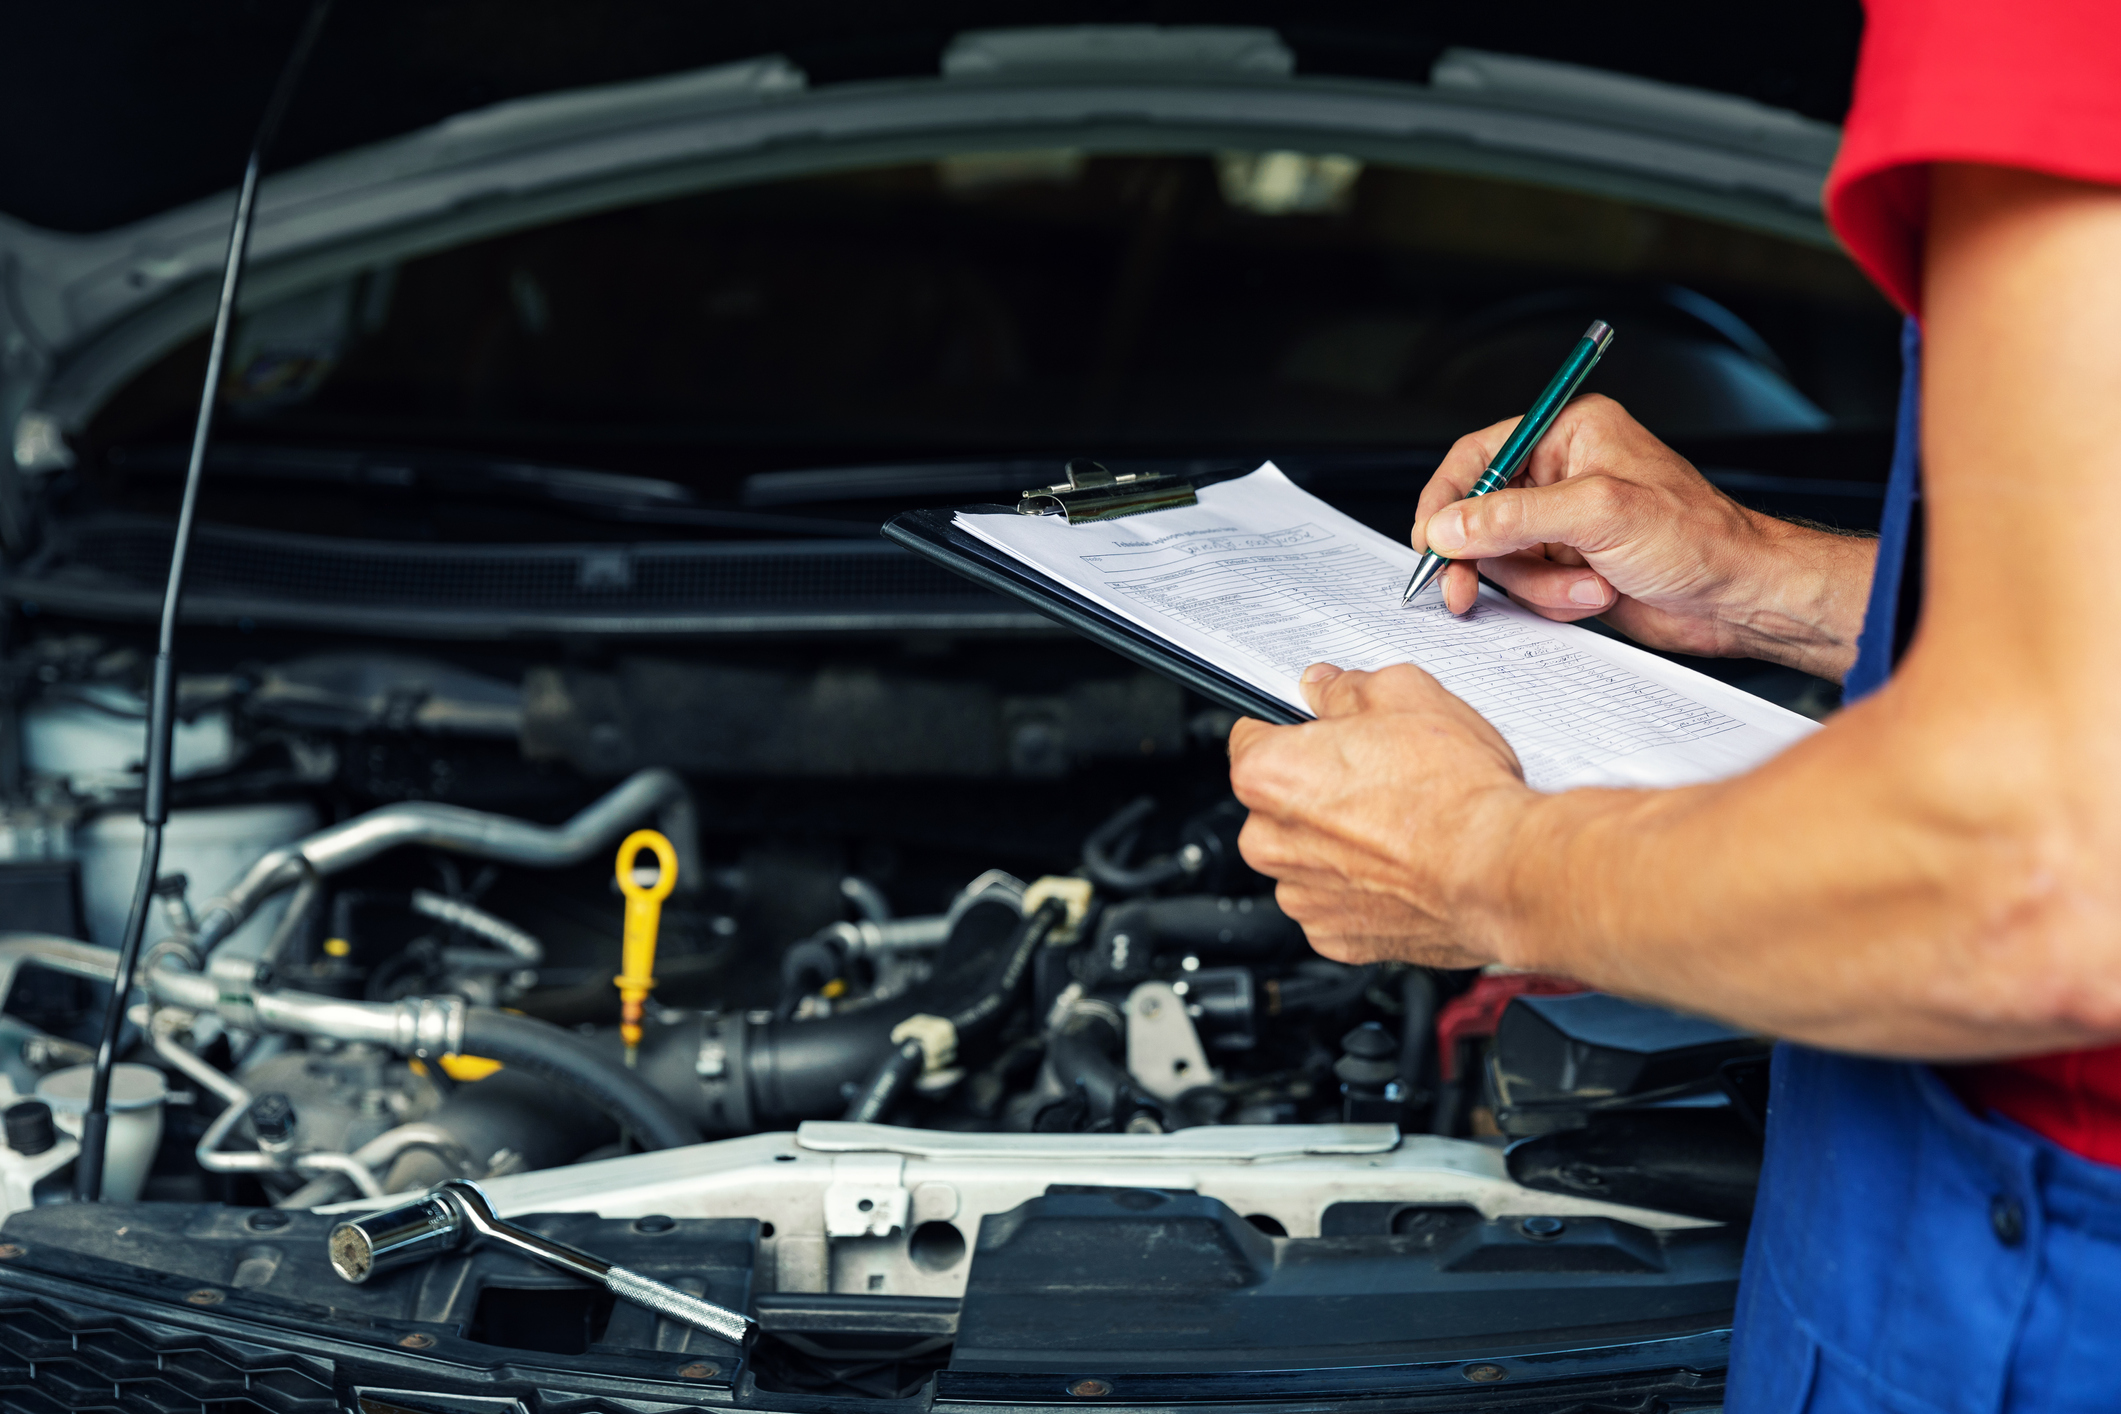 The ASE-certified automotive technicians at Scheller Automotive provide a complete range of vehicle maintenance services.